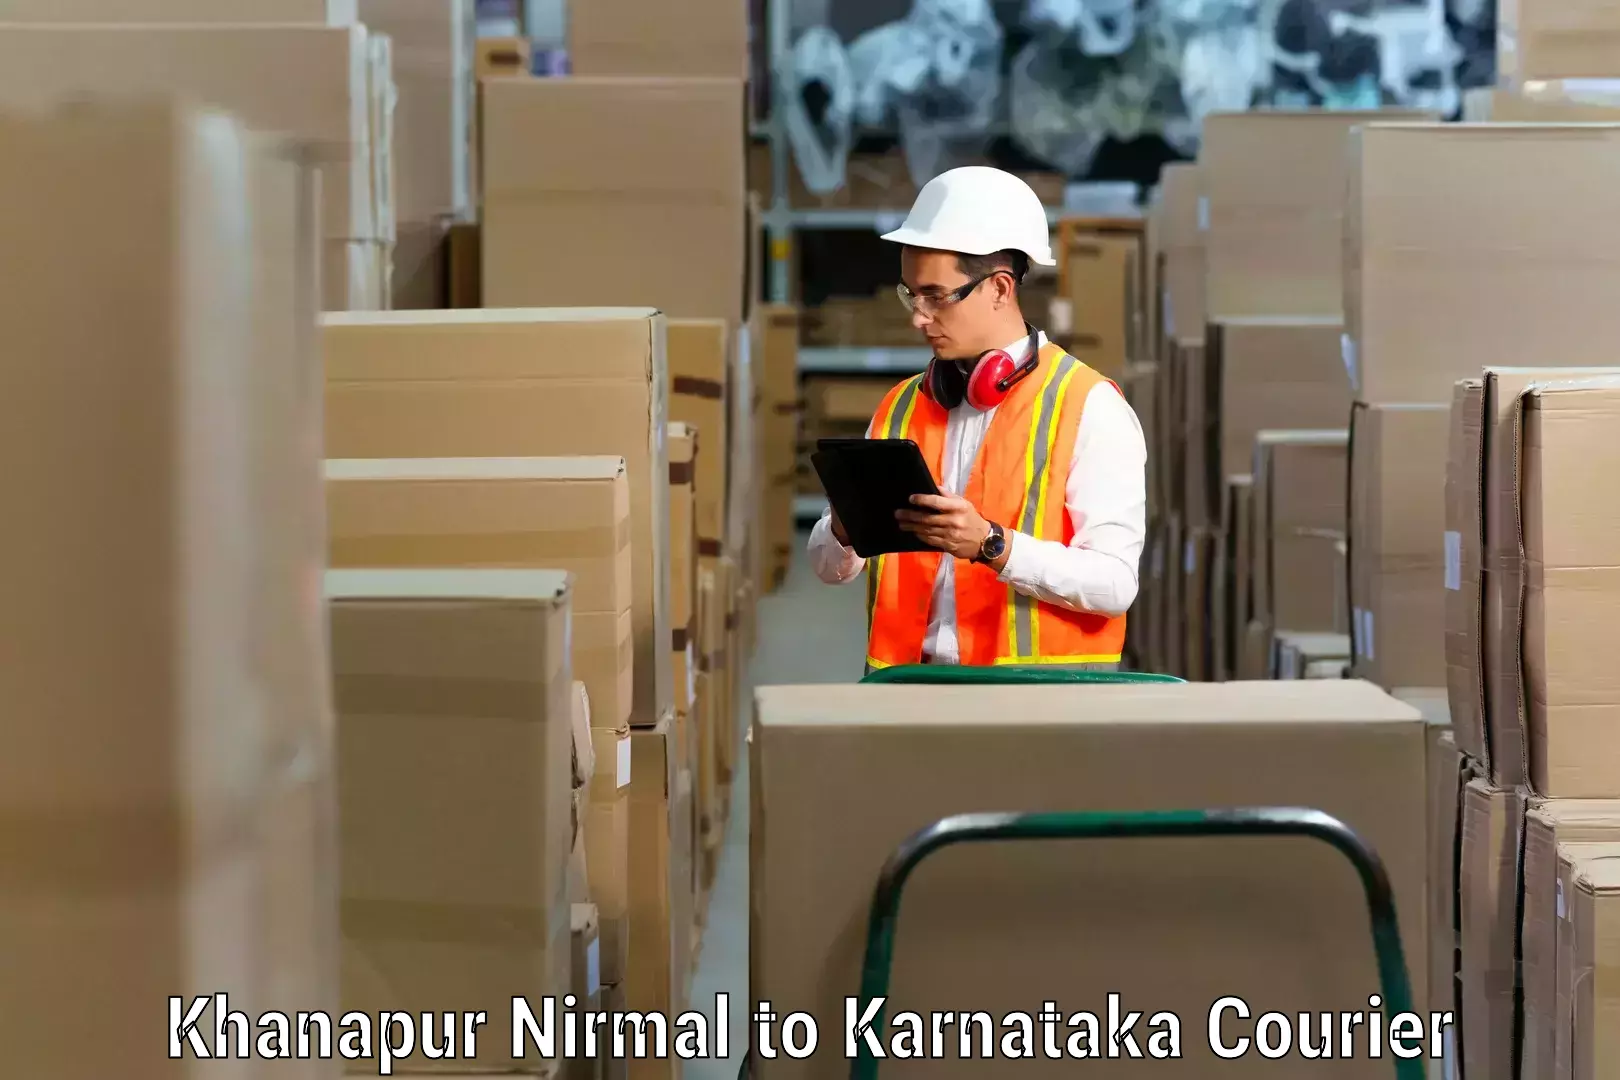 Furniture delivery service Khanapur Nirmal to Yadgir